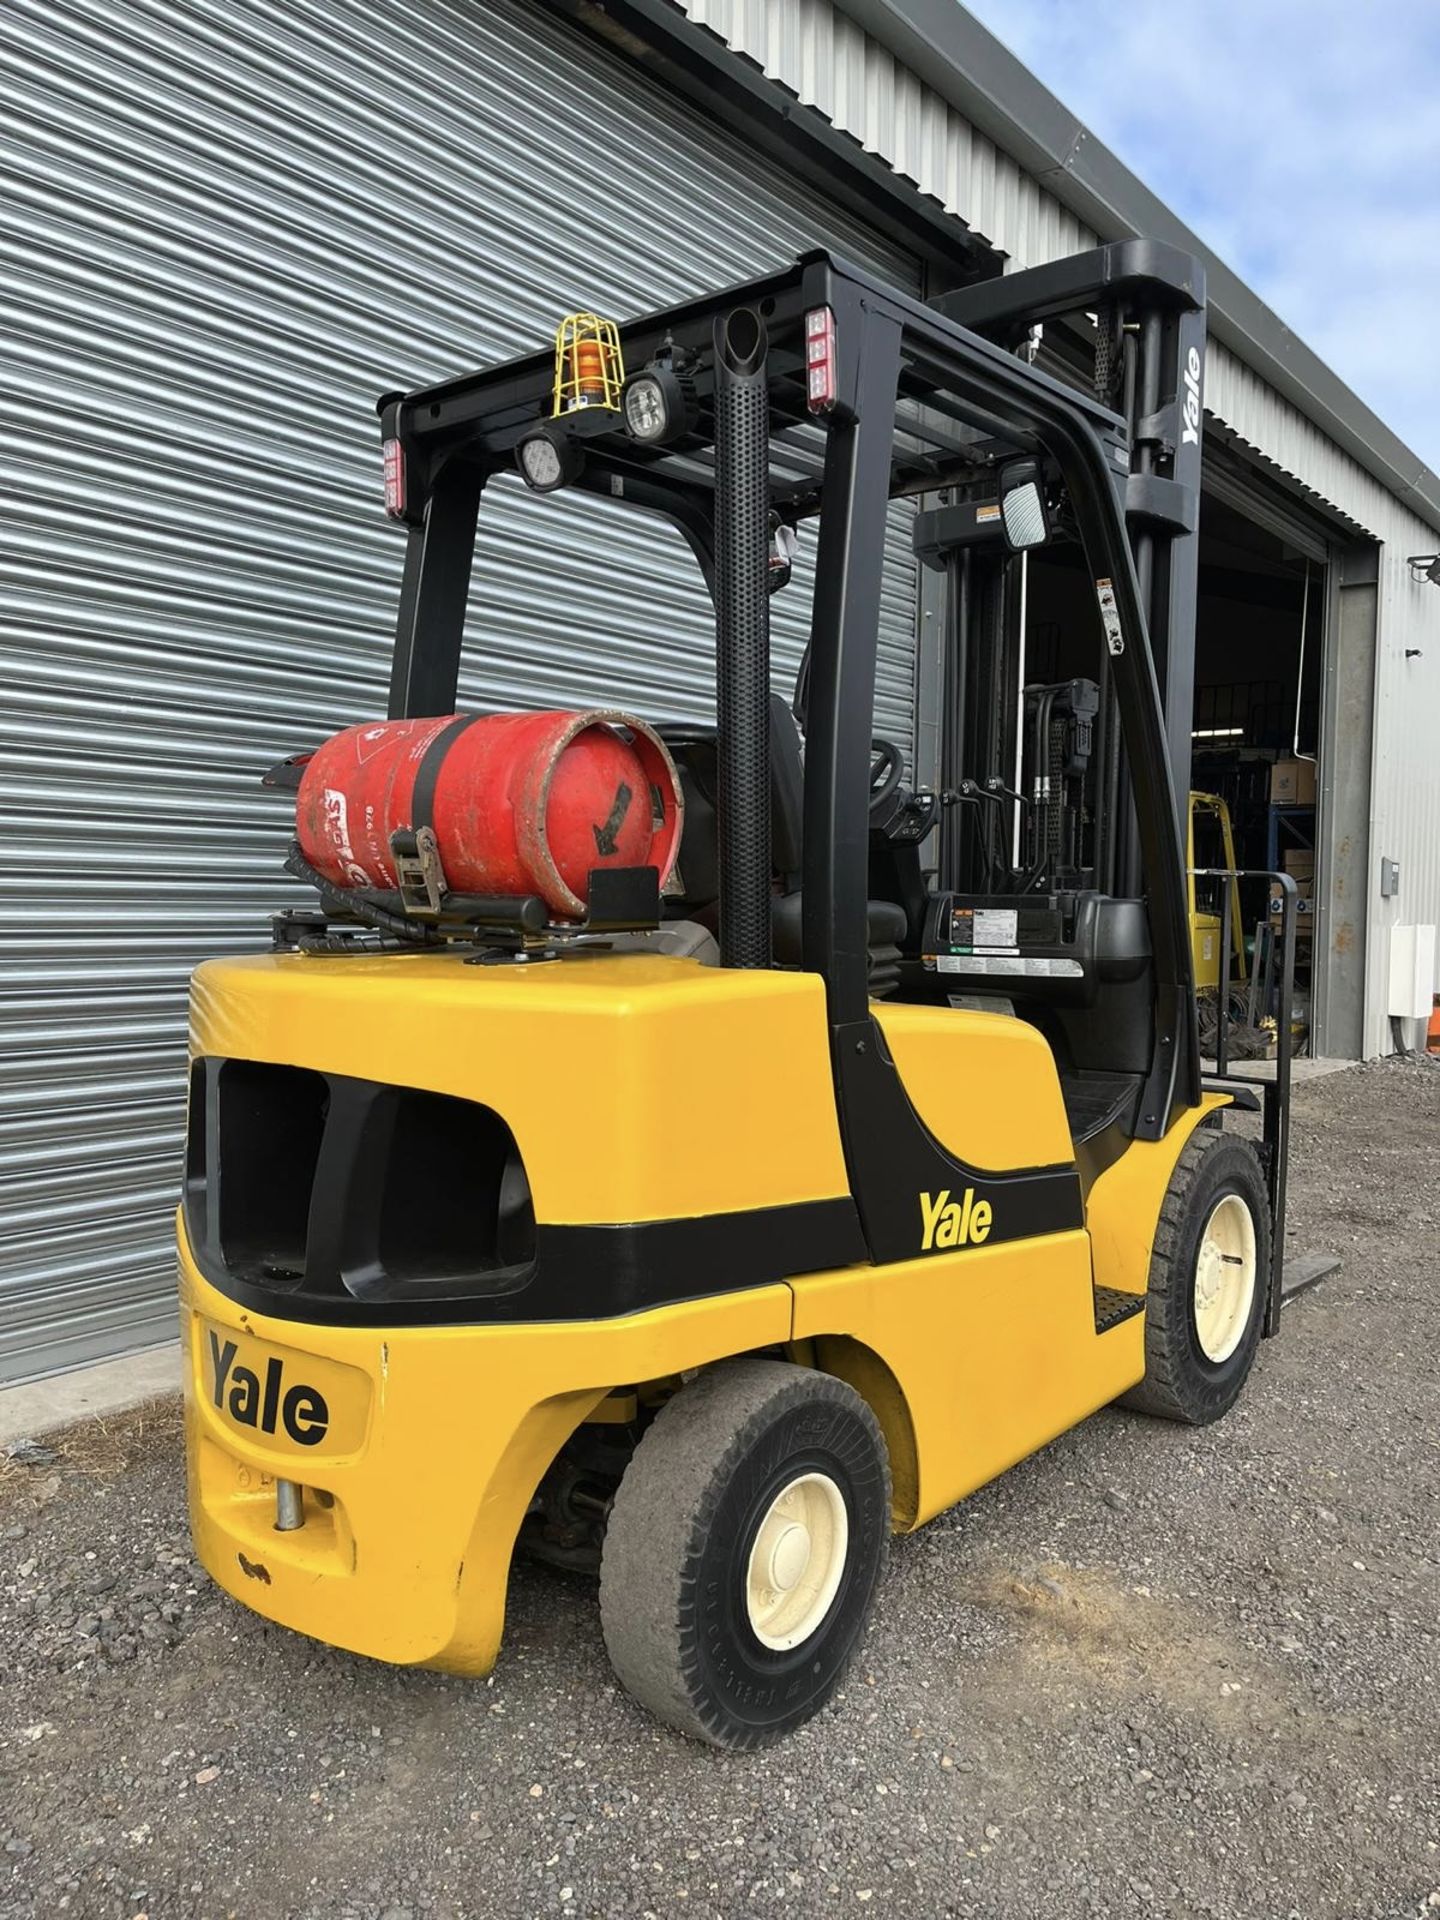 2017, YALE - 3 Tonne Gas Forklift - Image 9 of 10